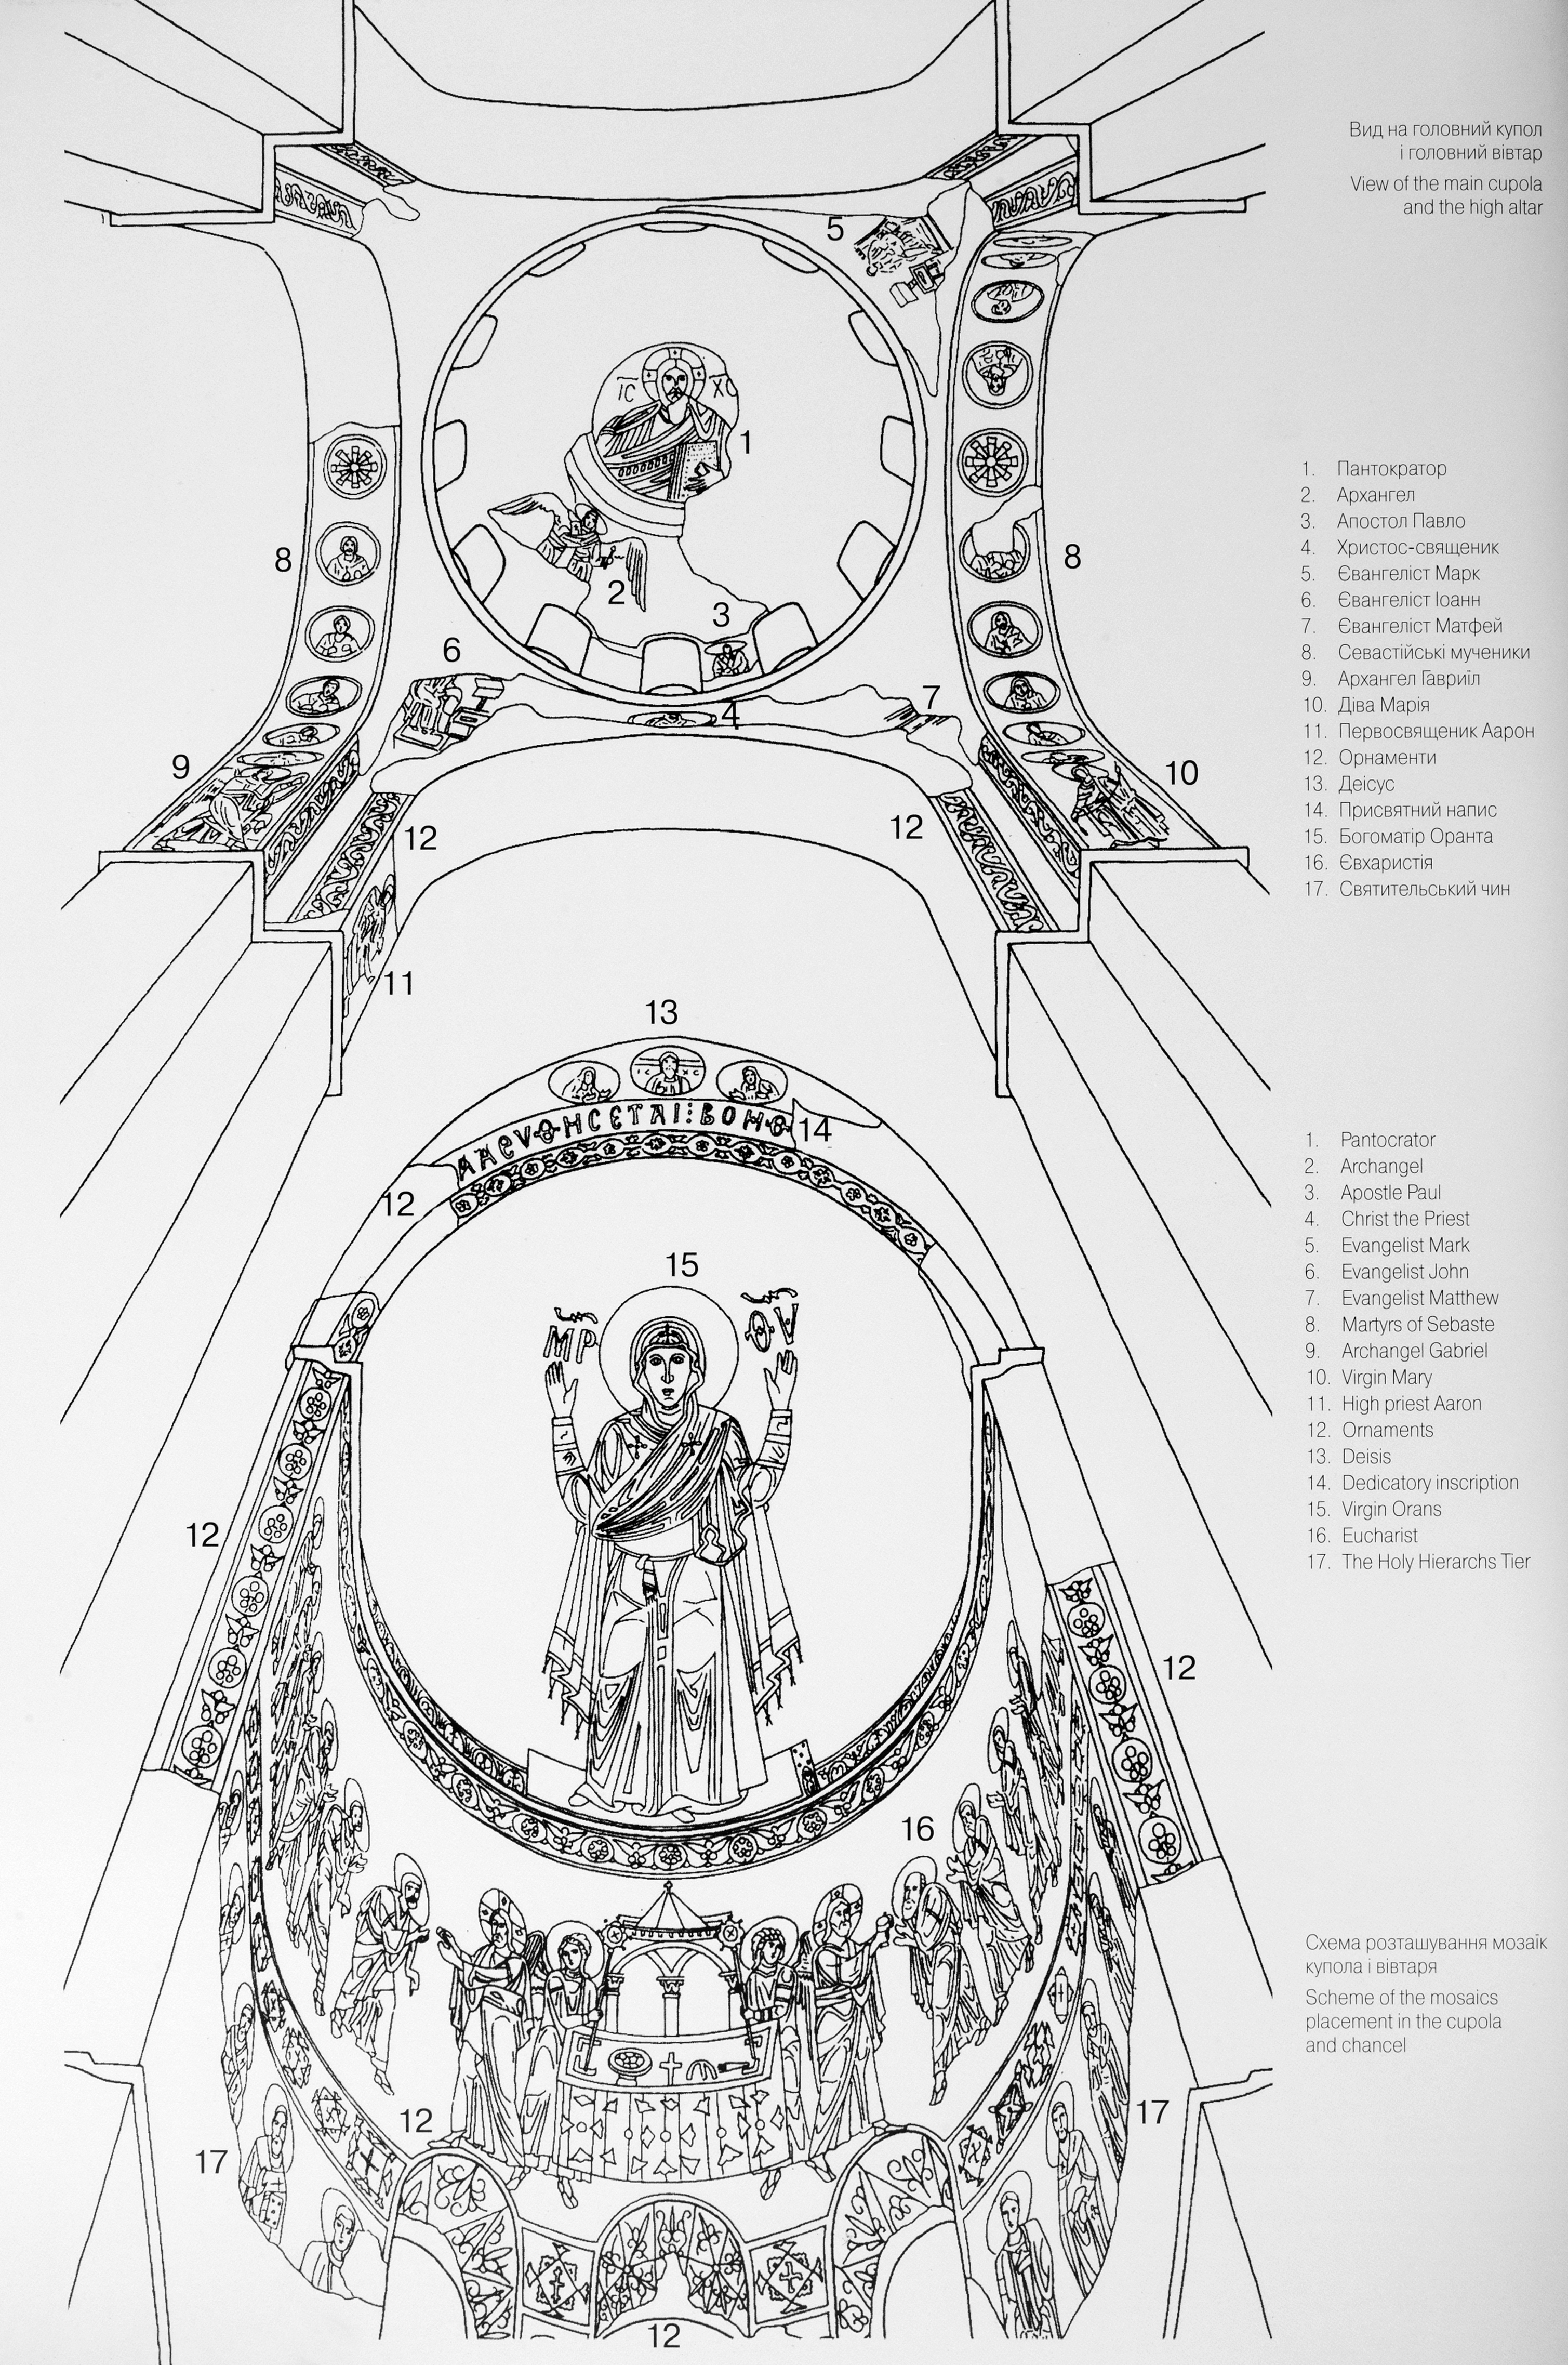 Diagram of the mosaics of St. Sophia of Kyiv